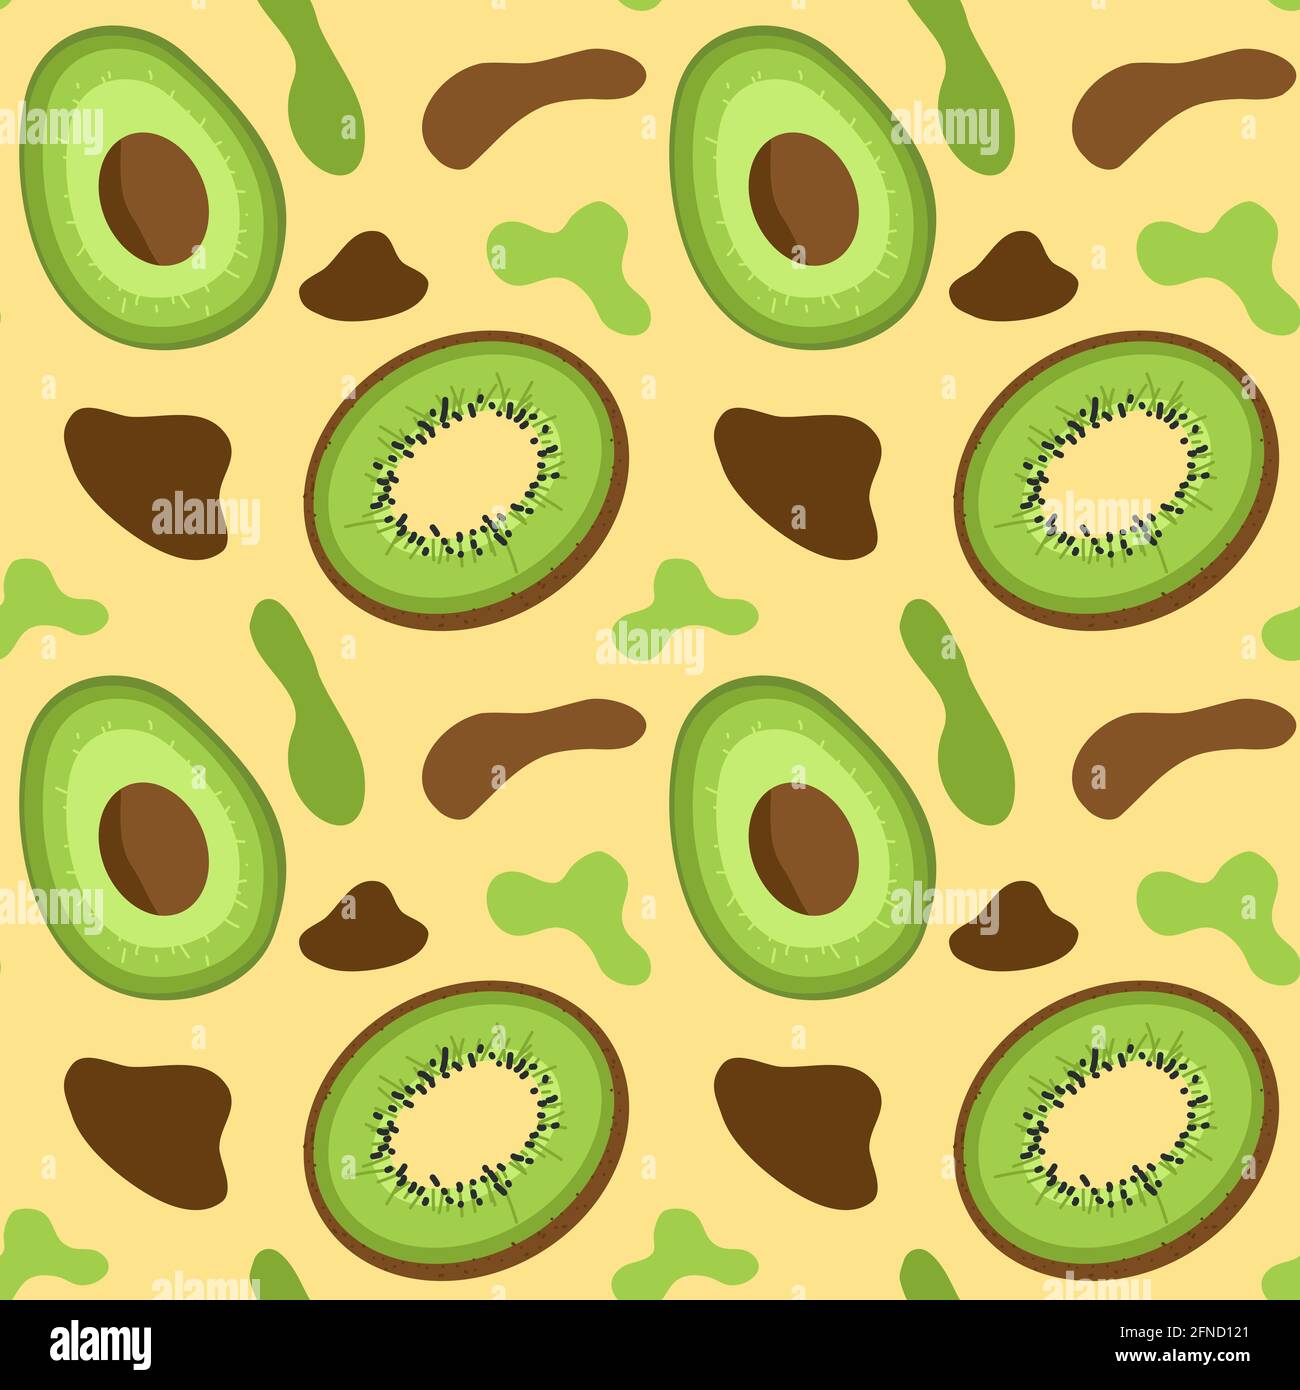 Avocado kiwi fruits and abstract organic shapes seamless pattern, half sliced avocado and kiwi vector illustrations Stock Vector